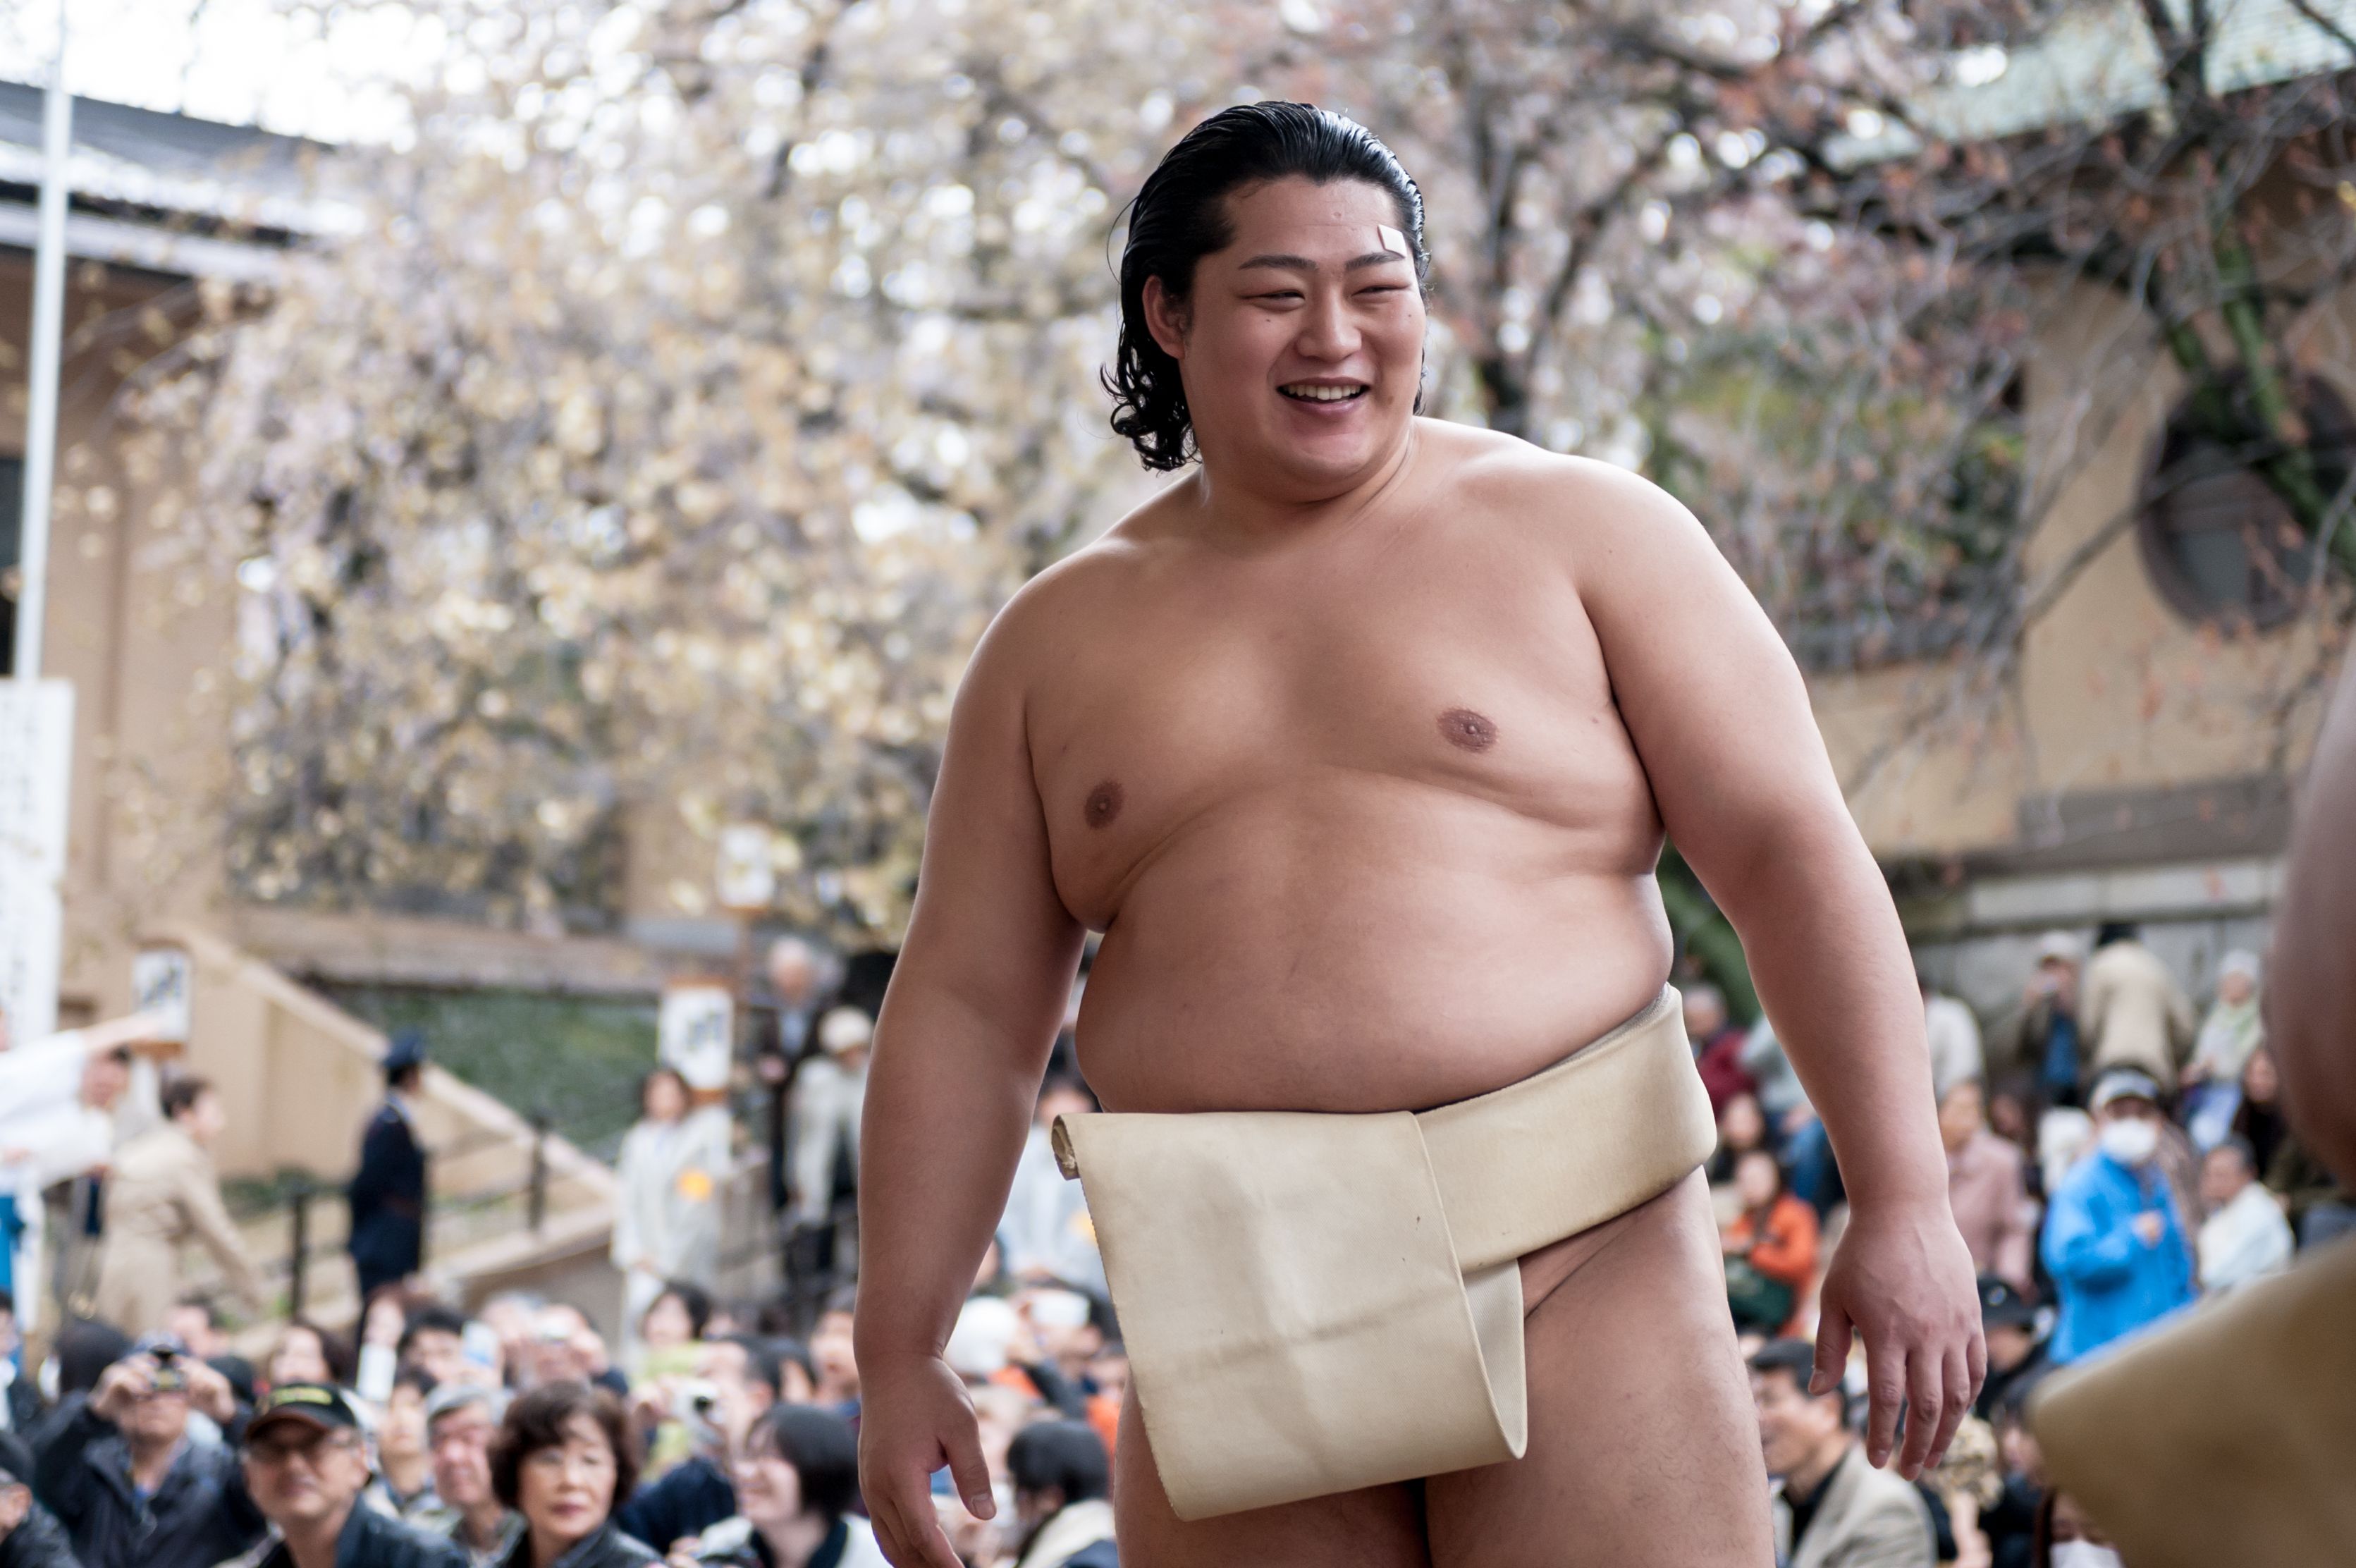 https://media.cnn.com/api/v1/images/stellar/prod/160212161800-sumo-wrestler-smiling.jpg?q=w_3342,h_2224,x_0,y_0,c_fill